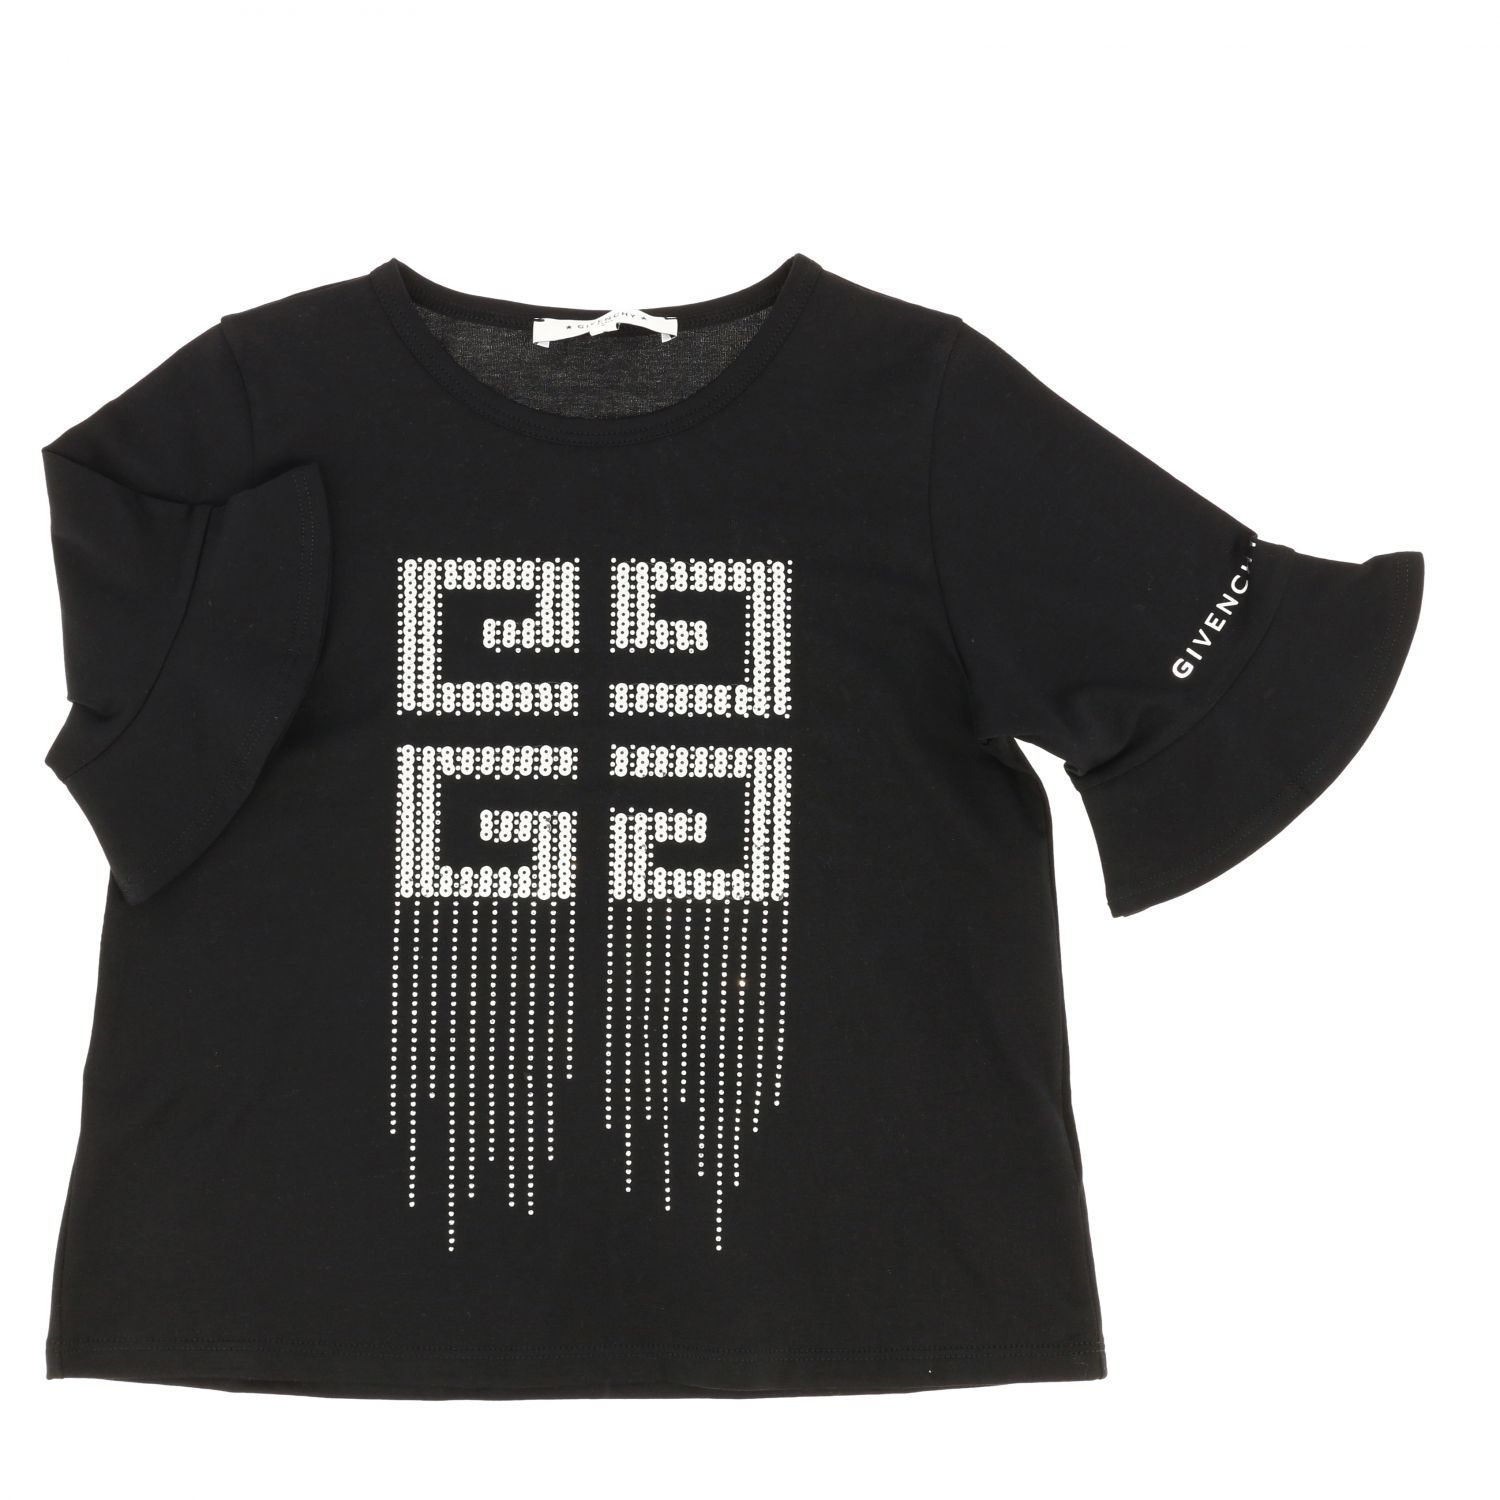 GIVENCHY: t-shirt with maxi fringed logo - Black | GIVENCHY t-shirt ...